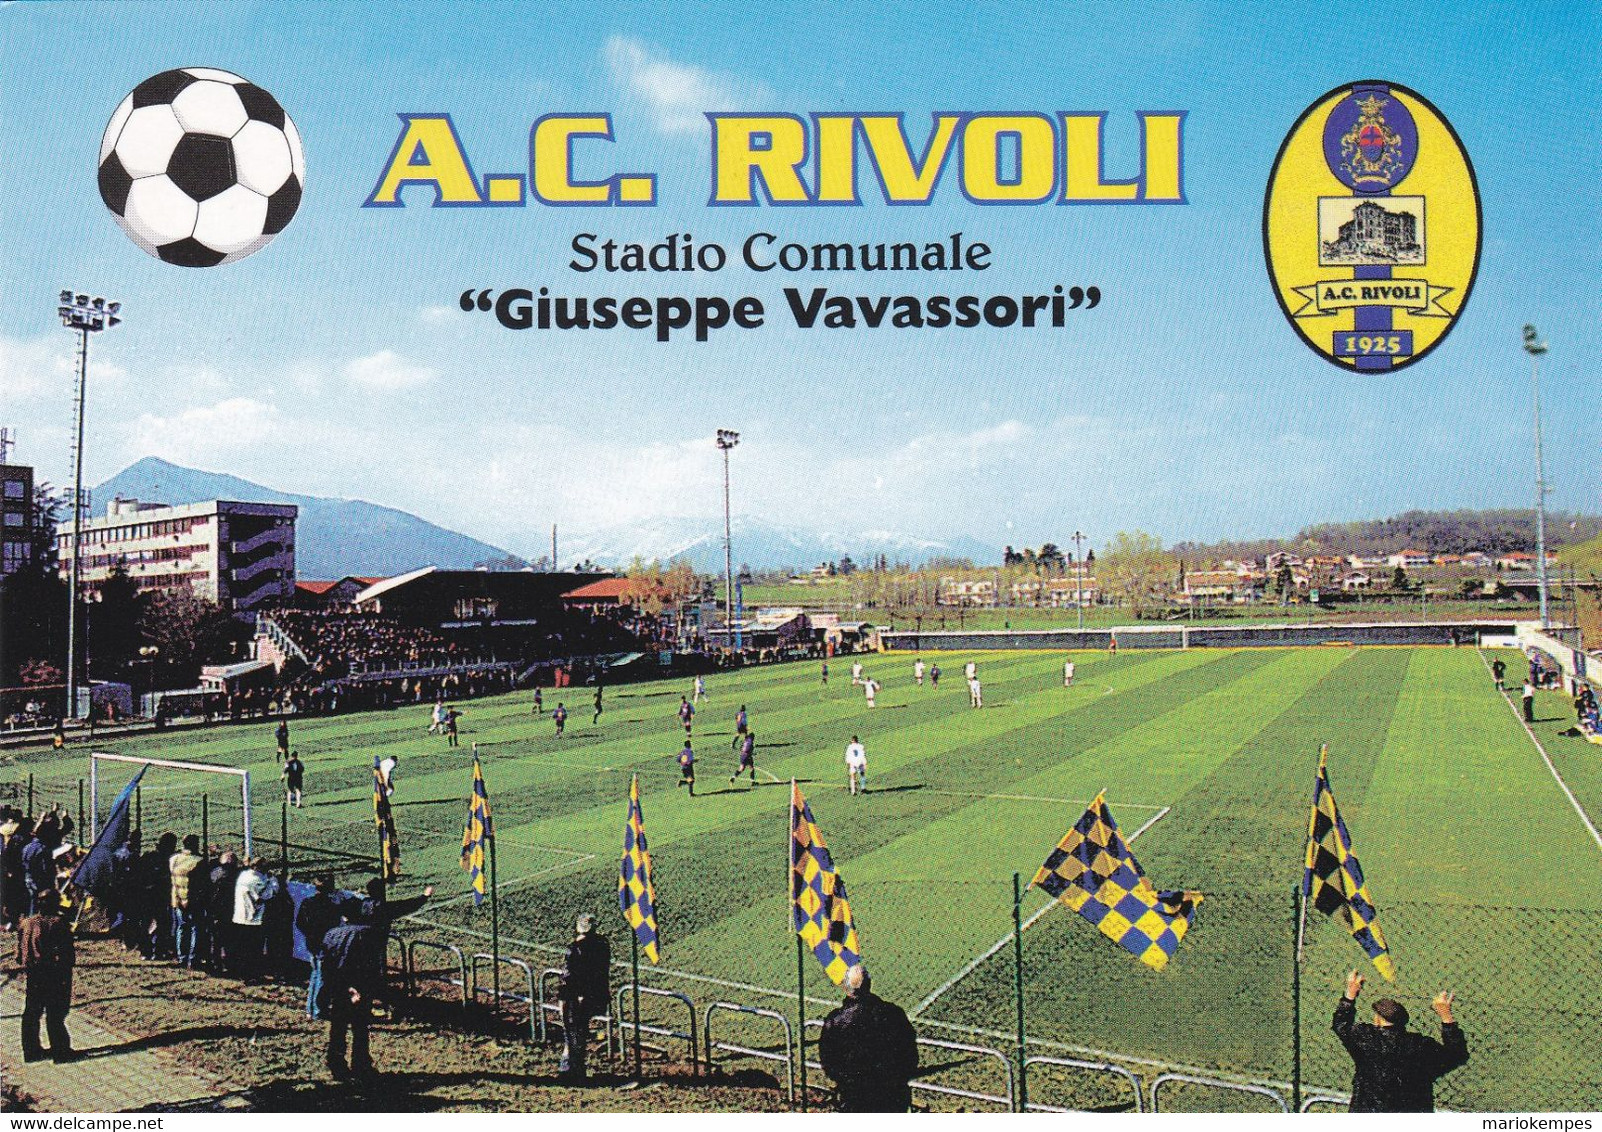 RIVOLI ( TO )_A.C. RIVOLI_STADIO COMUNALE "GIUSEPPE VAVASSORI" _Stadium_Stade_Estadio_Stadion - Rivoli